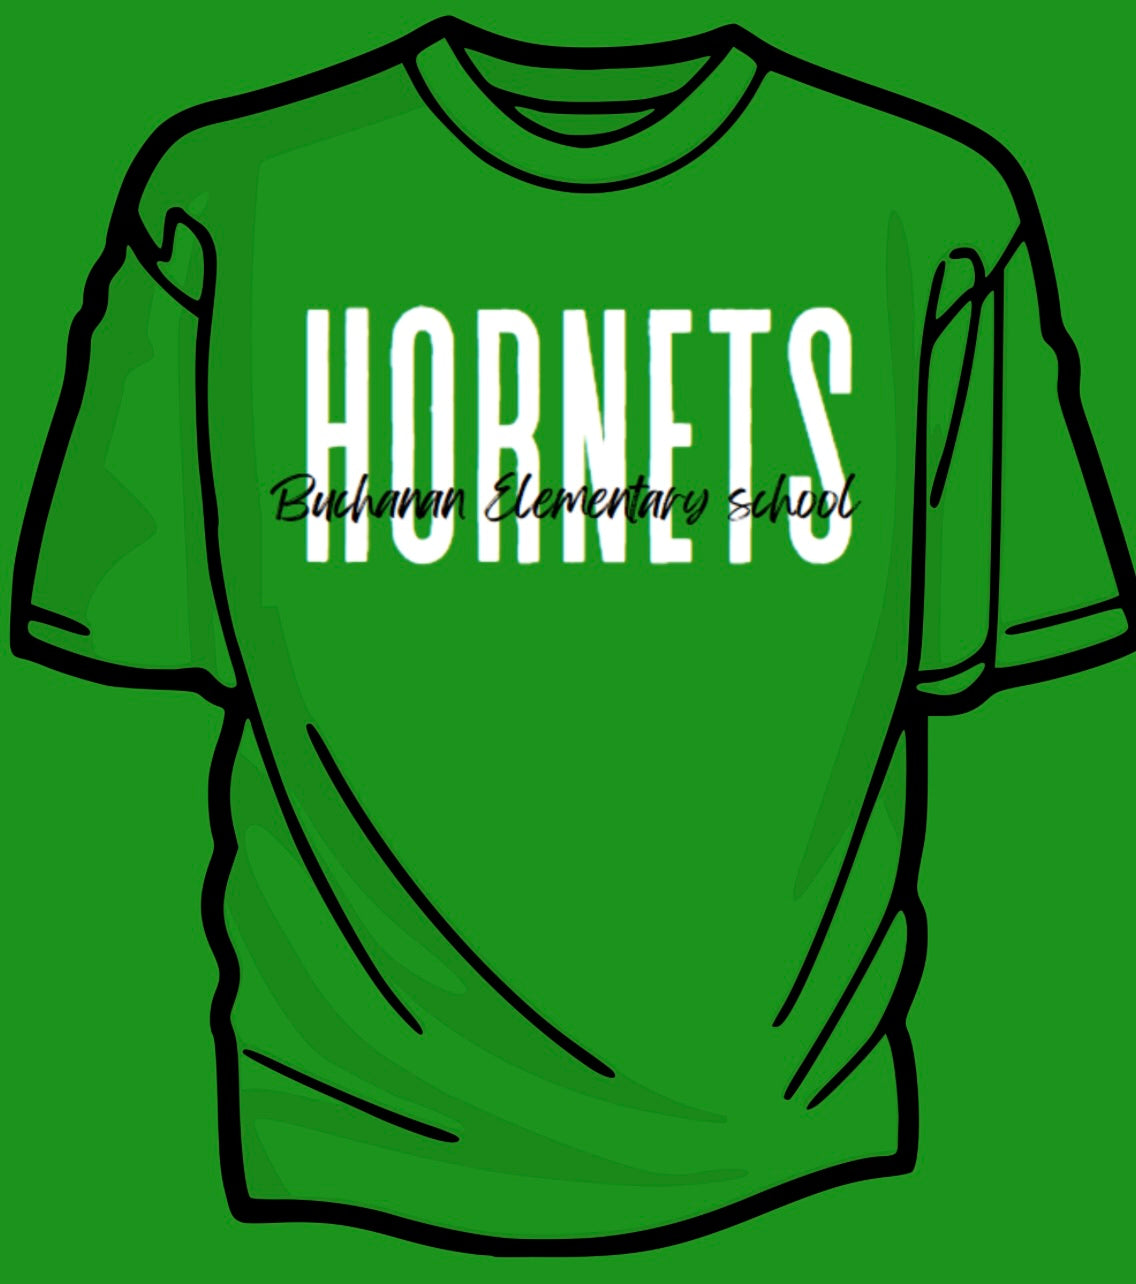 Hornets with cursive Buchanan Elementary Tshirt